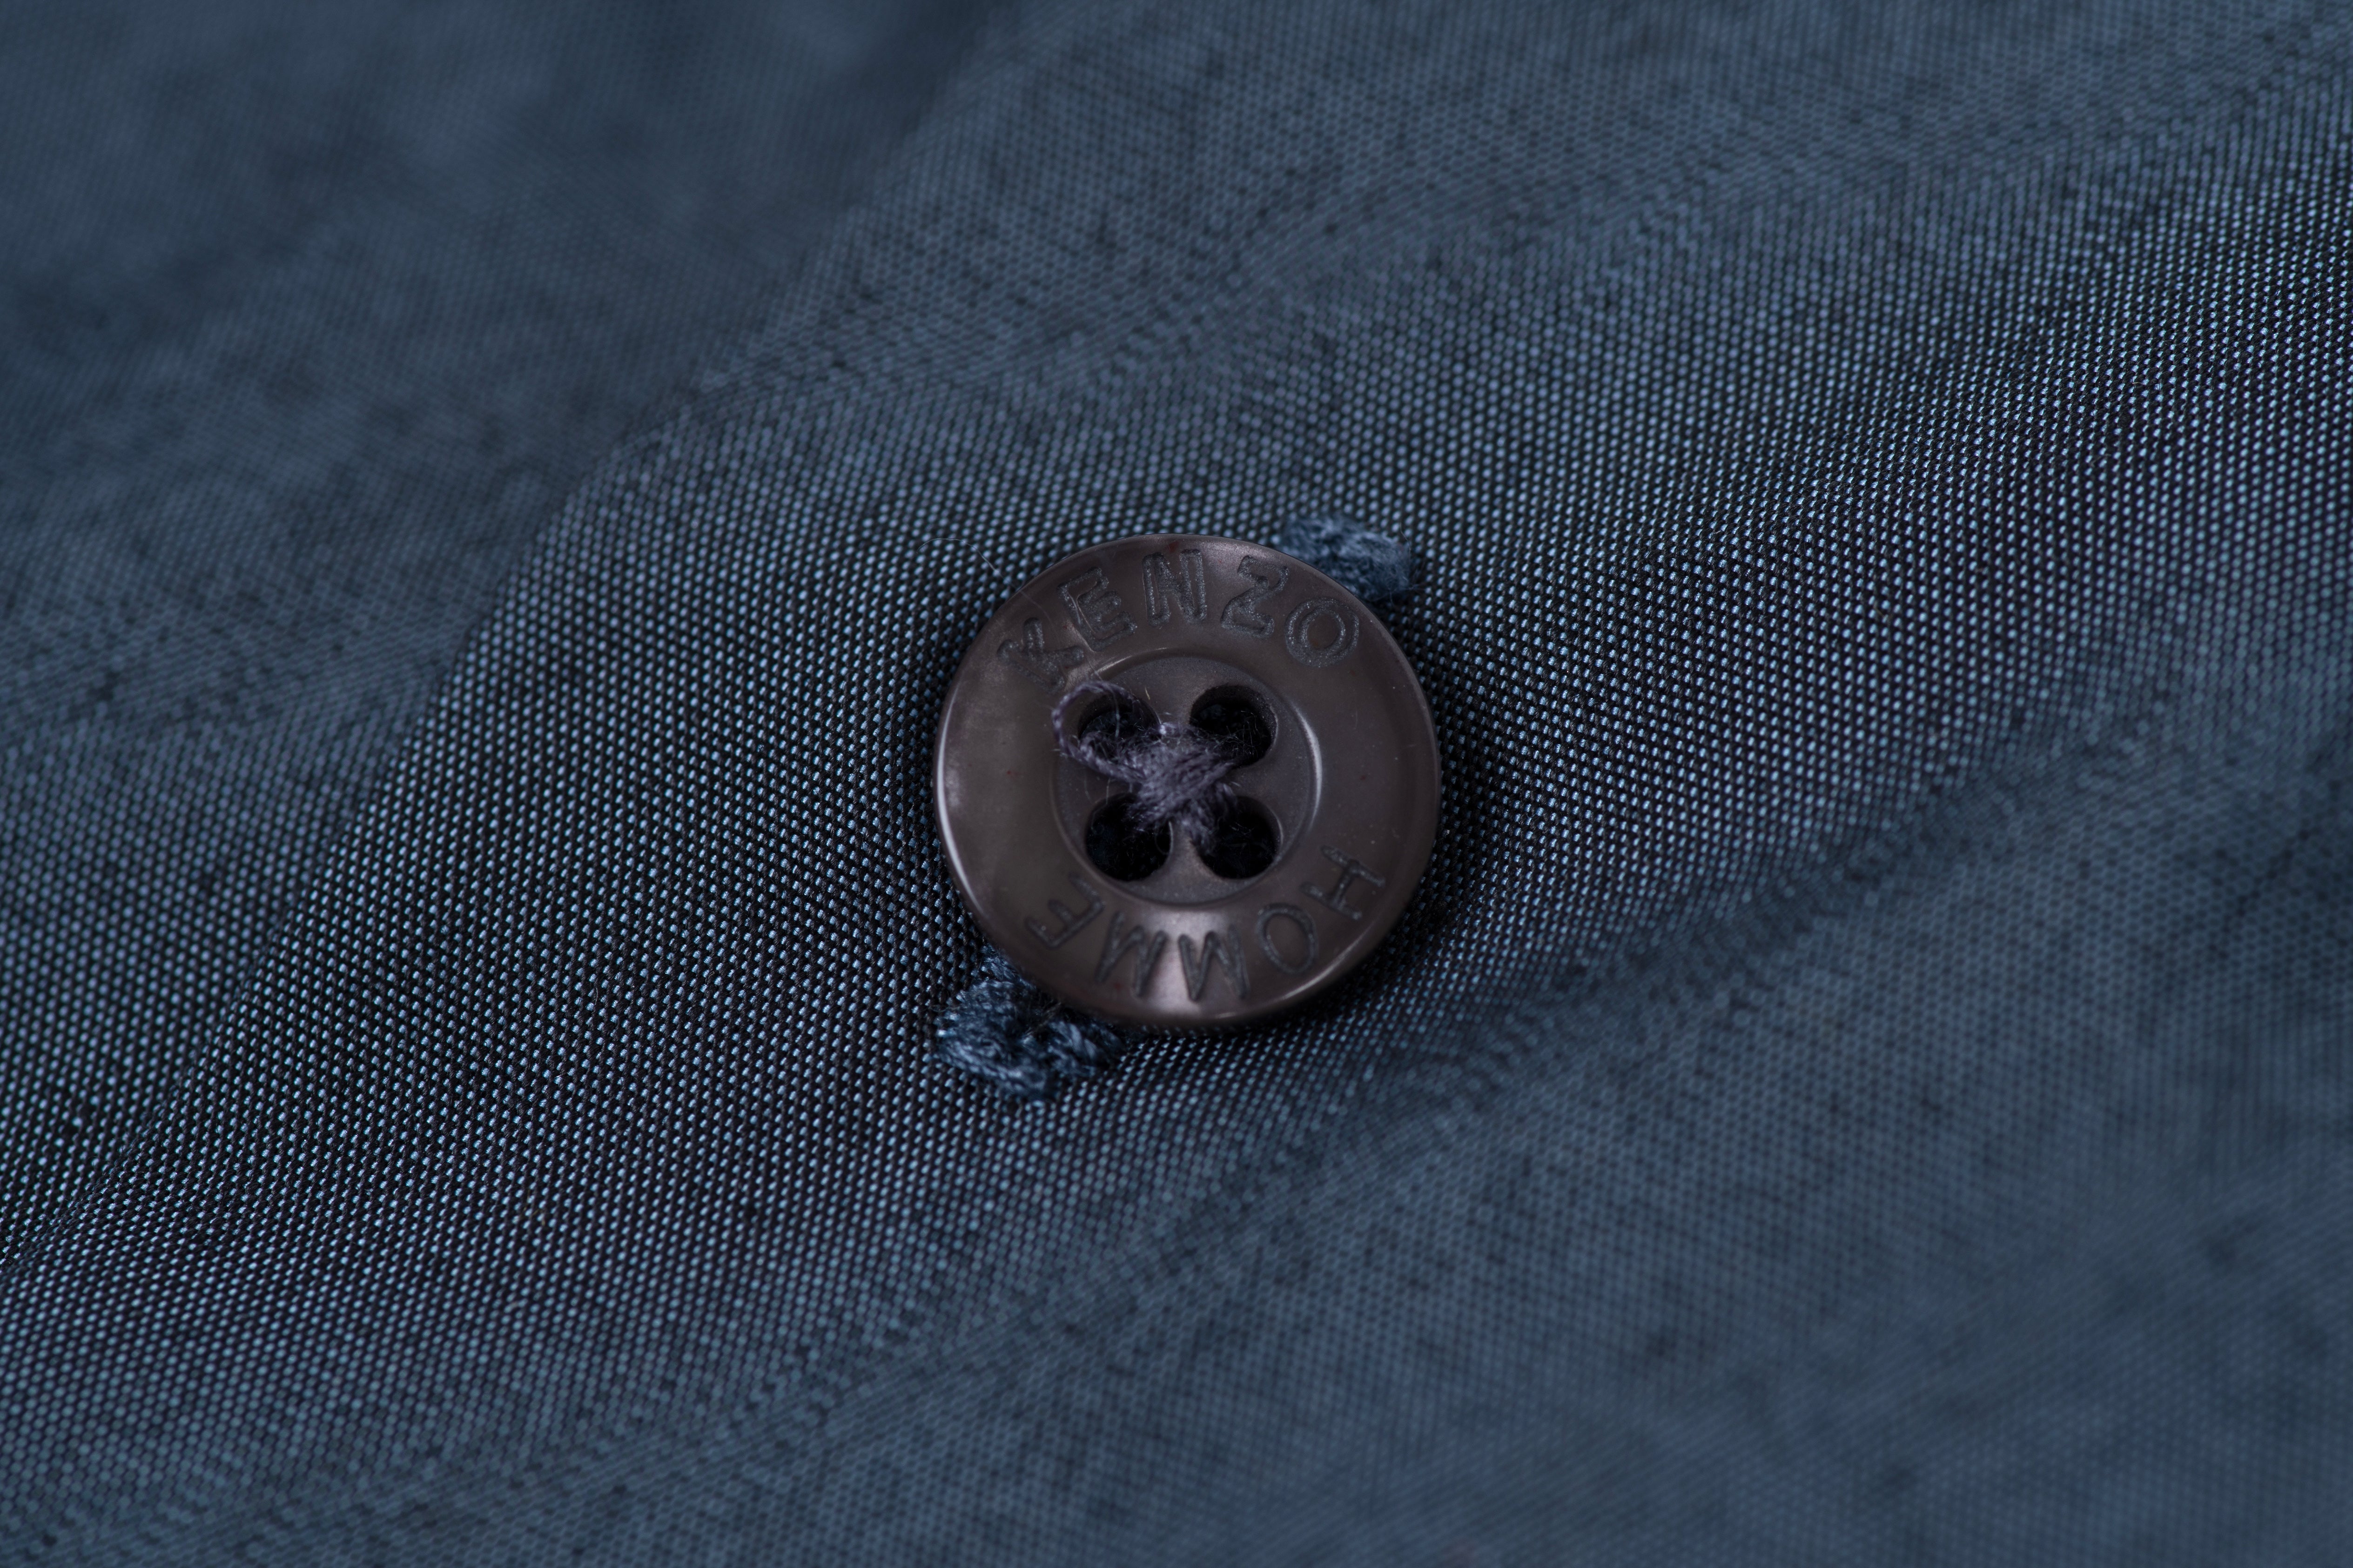 Kenzo Homme Men's Silk Blend Dark Metallic Blue Shirt, Size XL